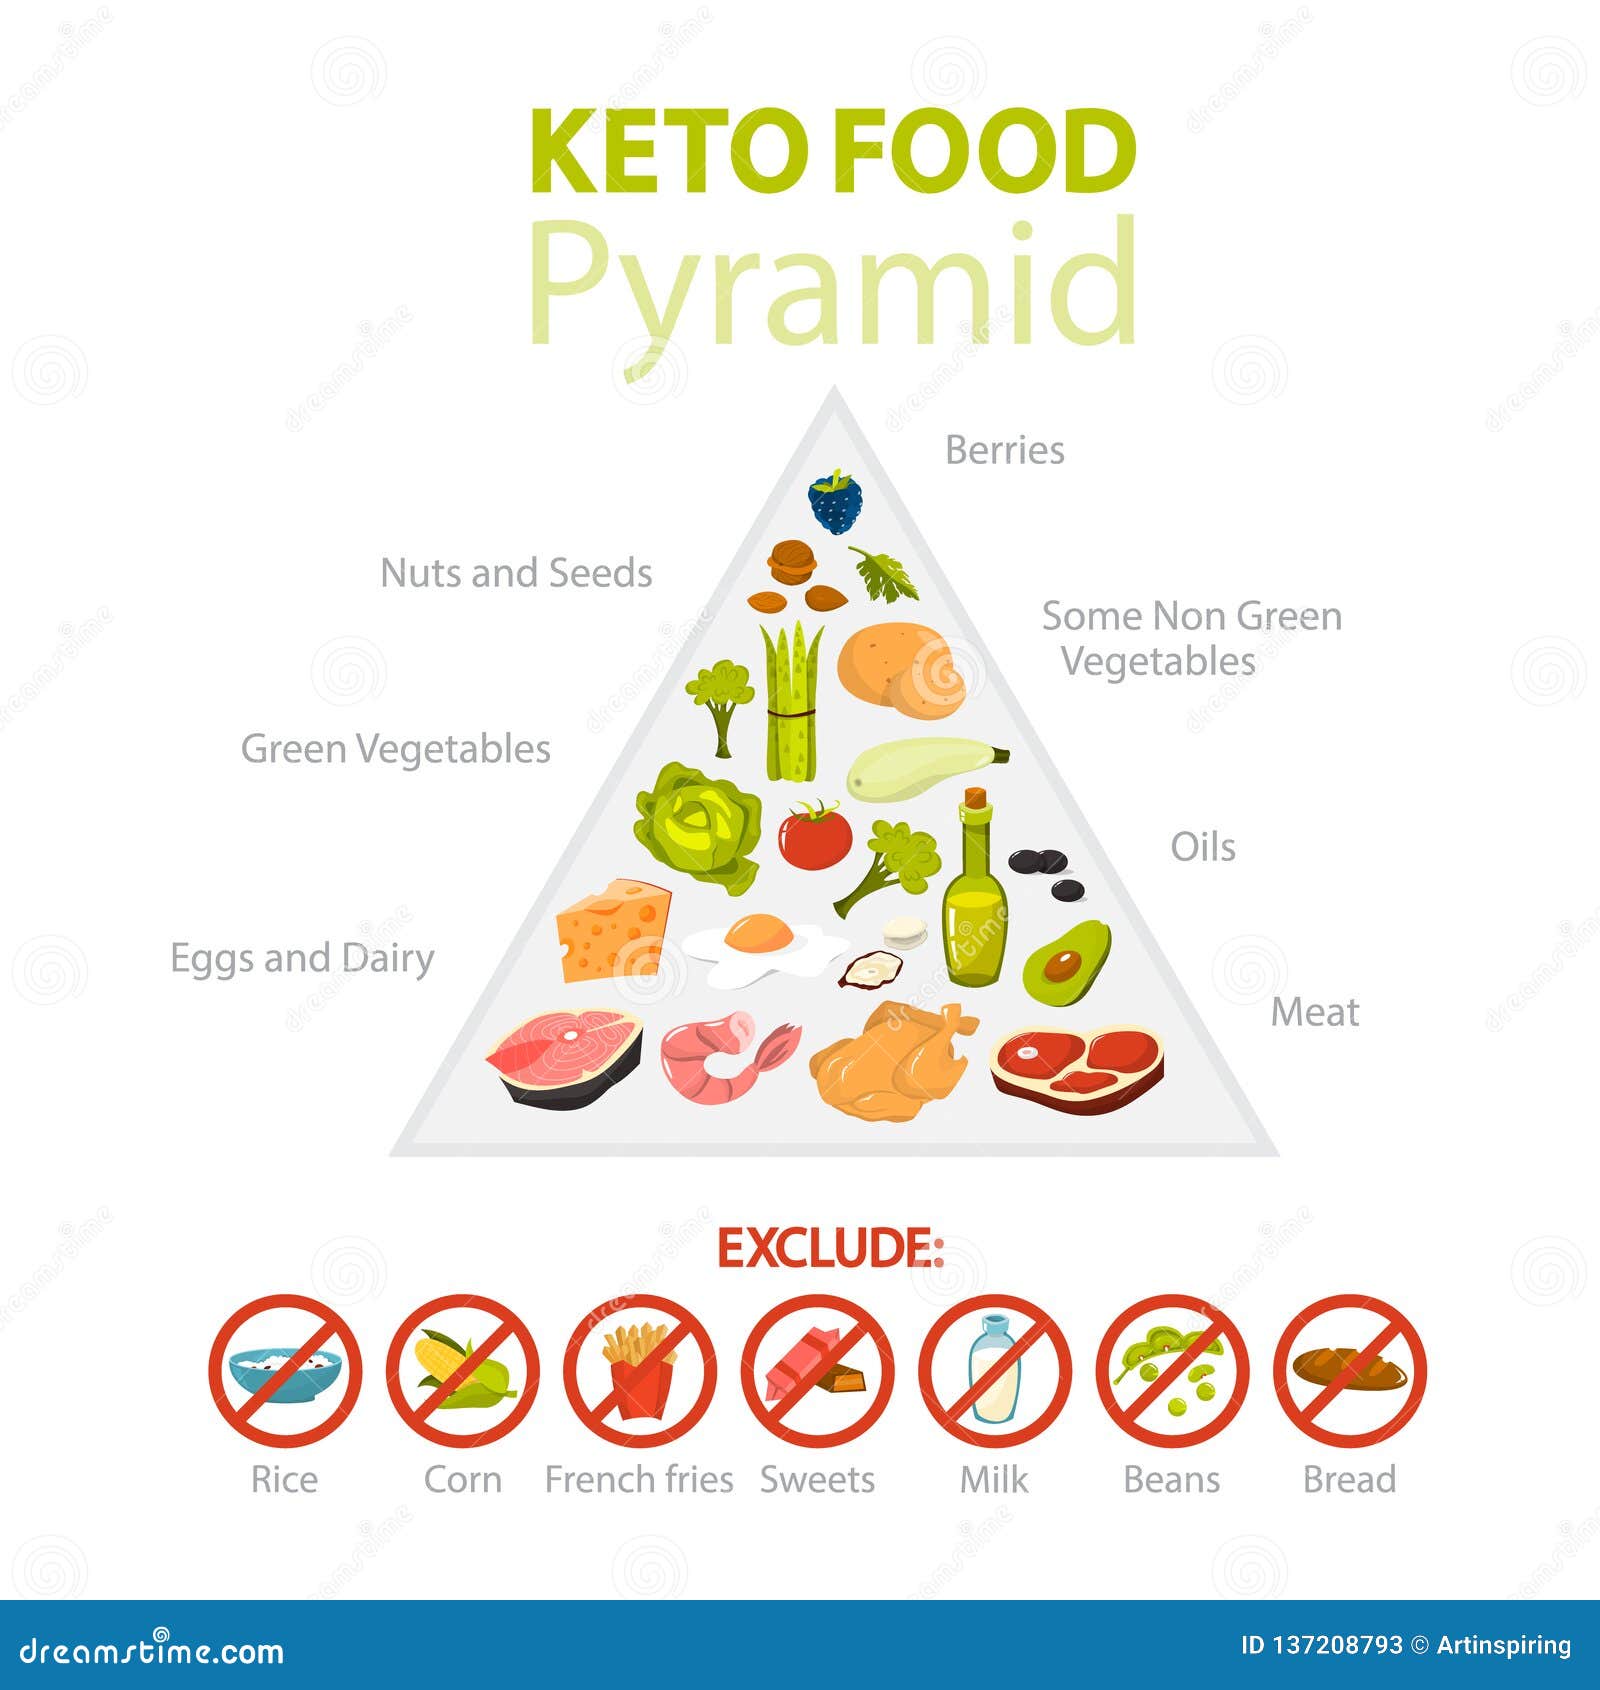 percent fat in ketogenic diet